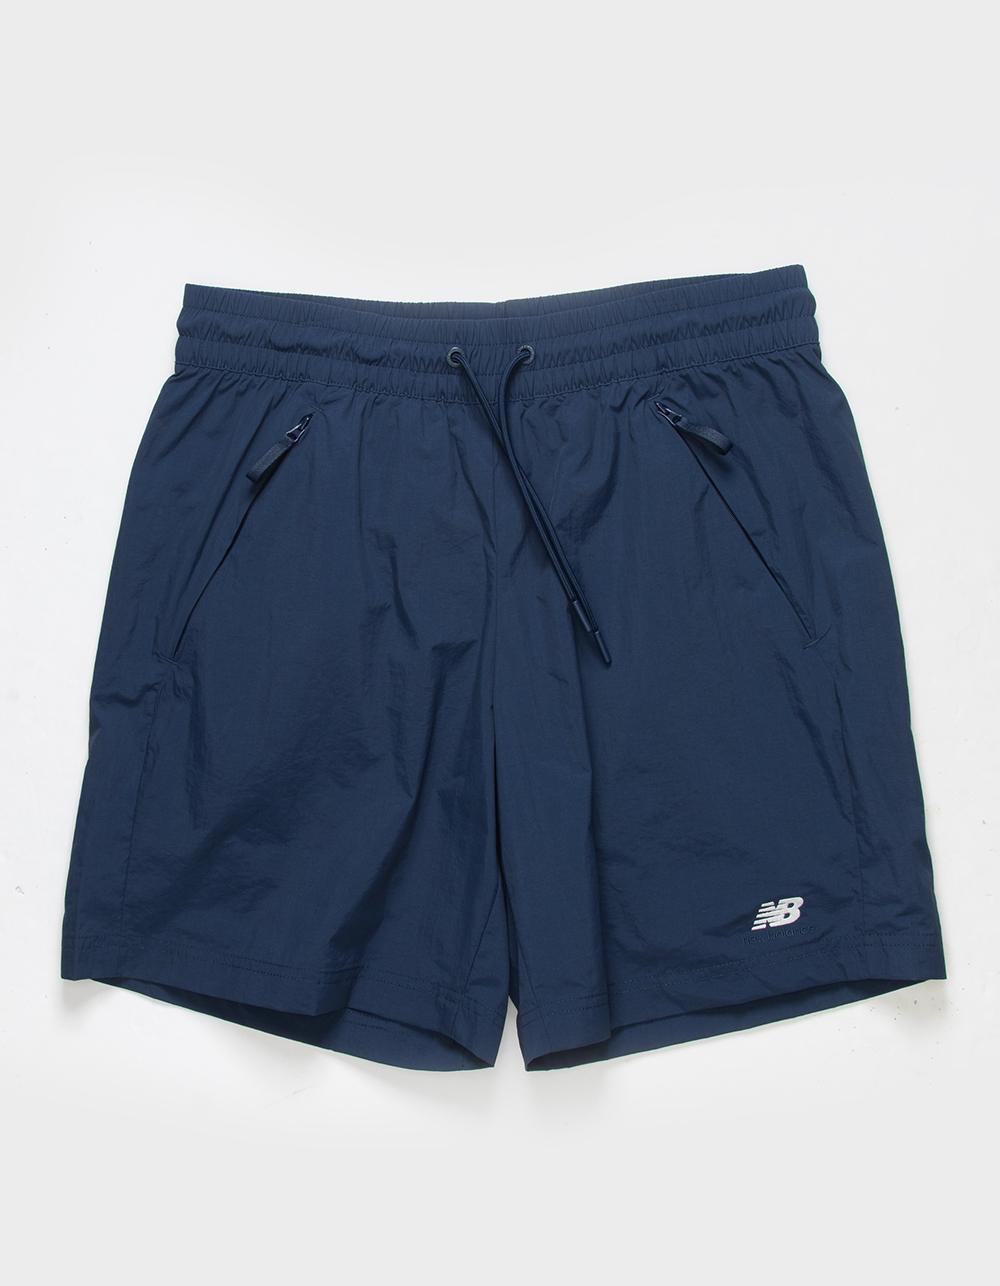 NEW BALANCE Mens Athletic Shorts - NAVY | Tillys